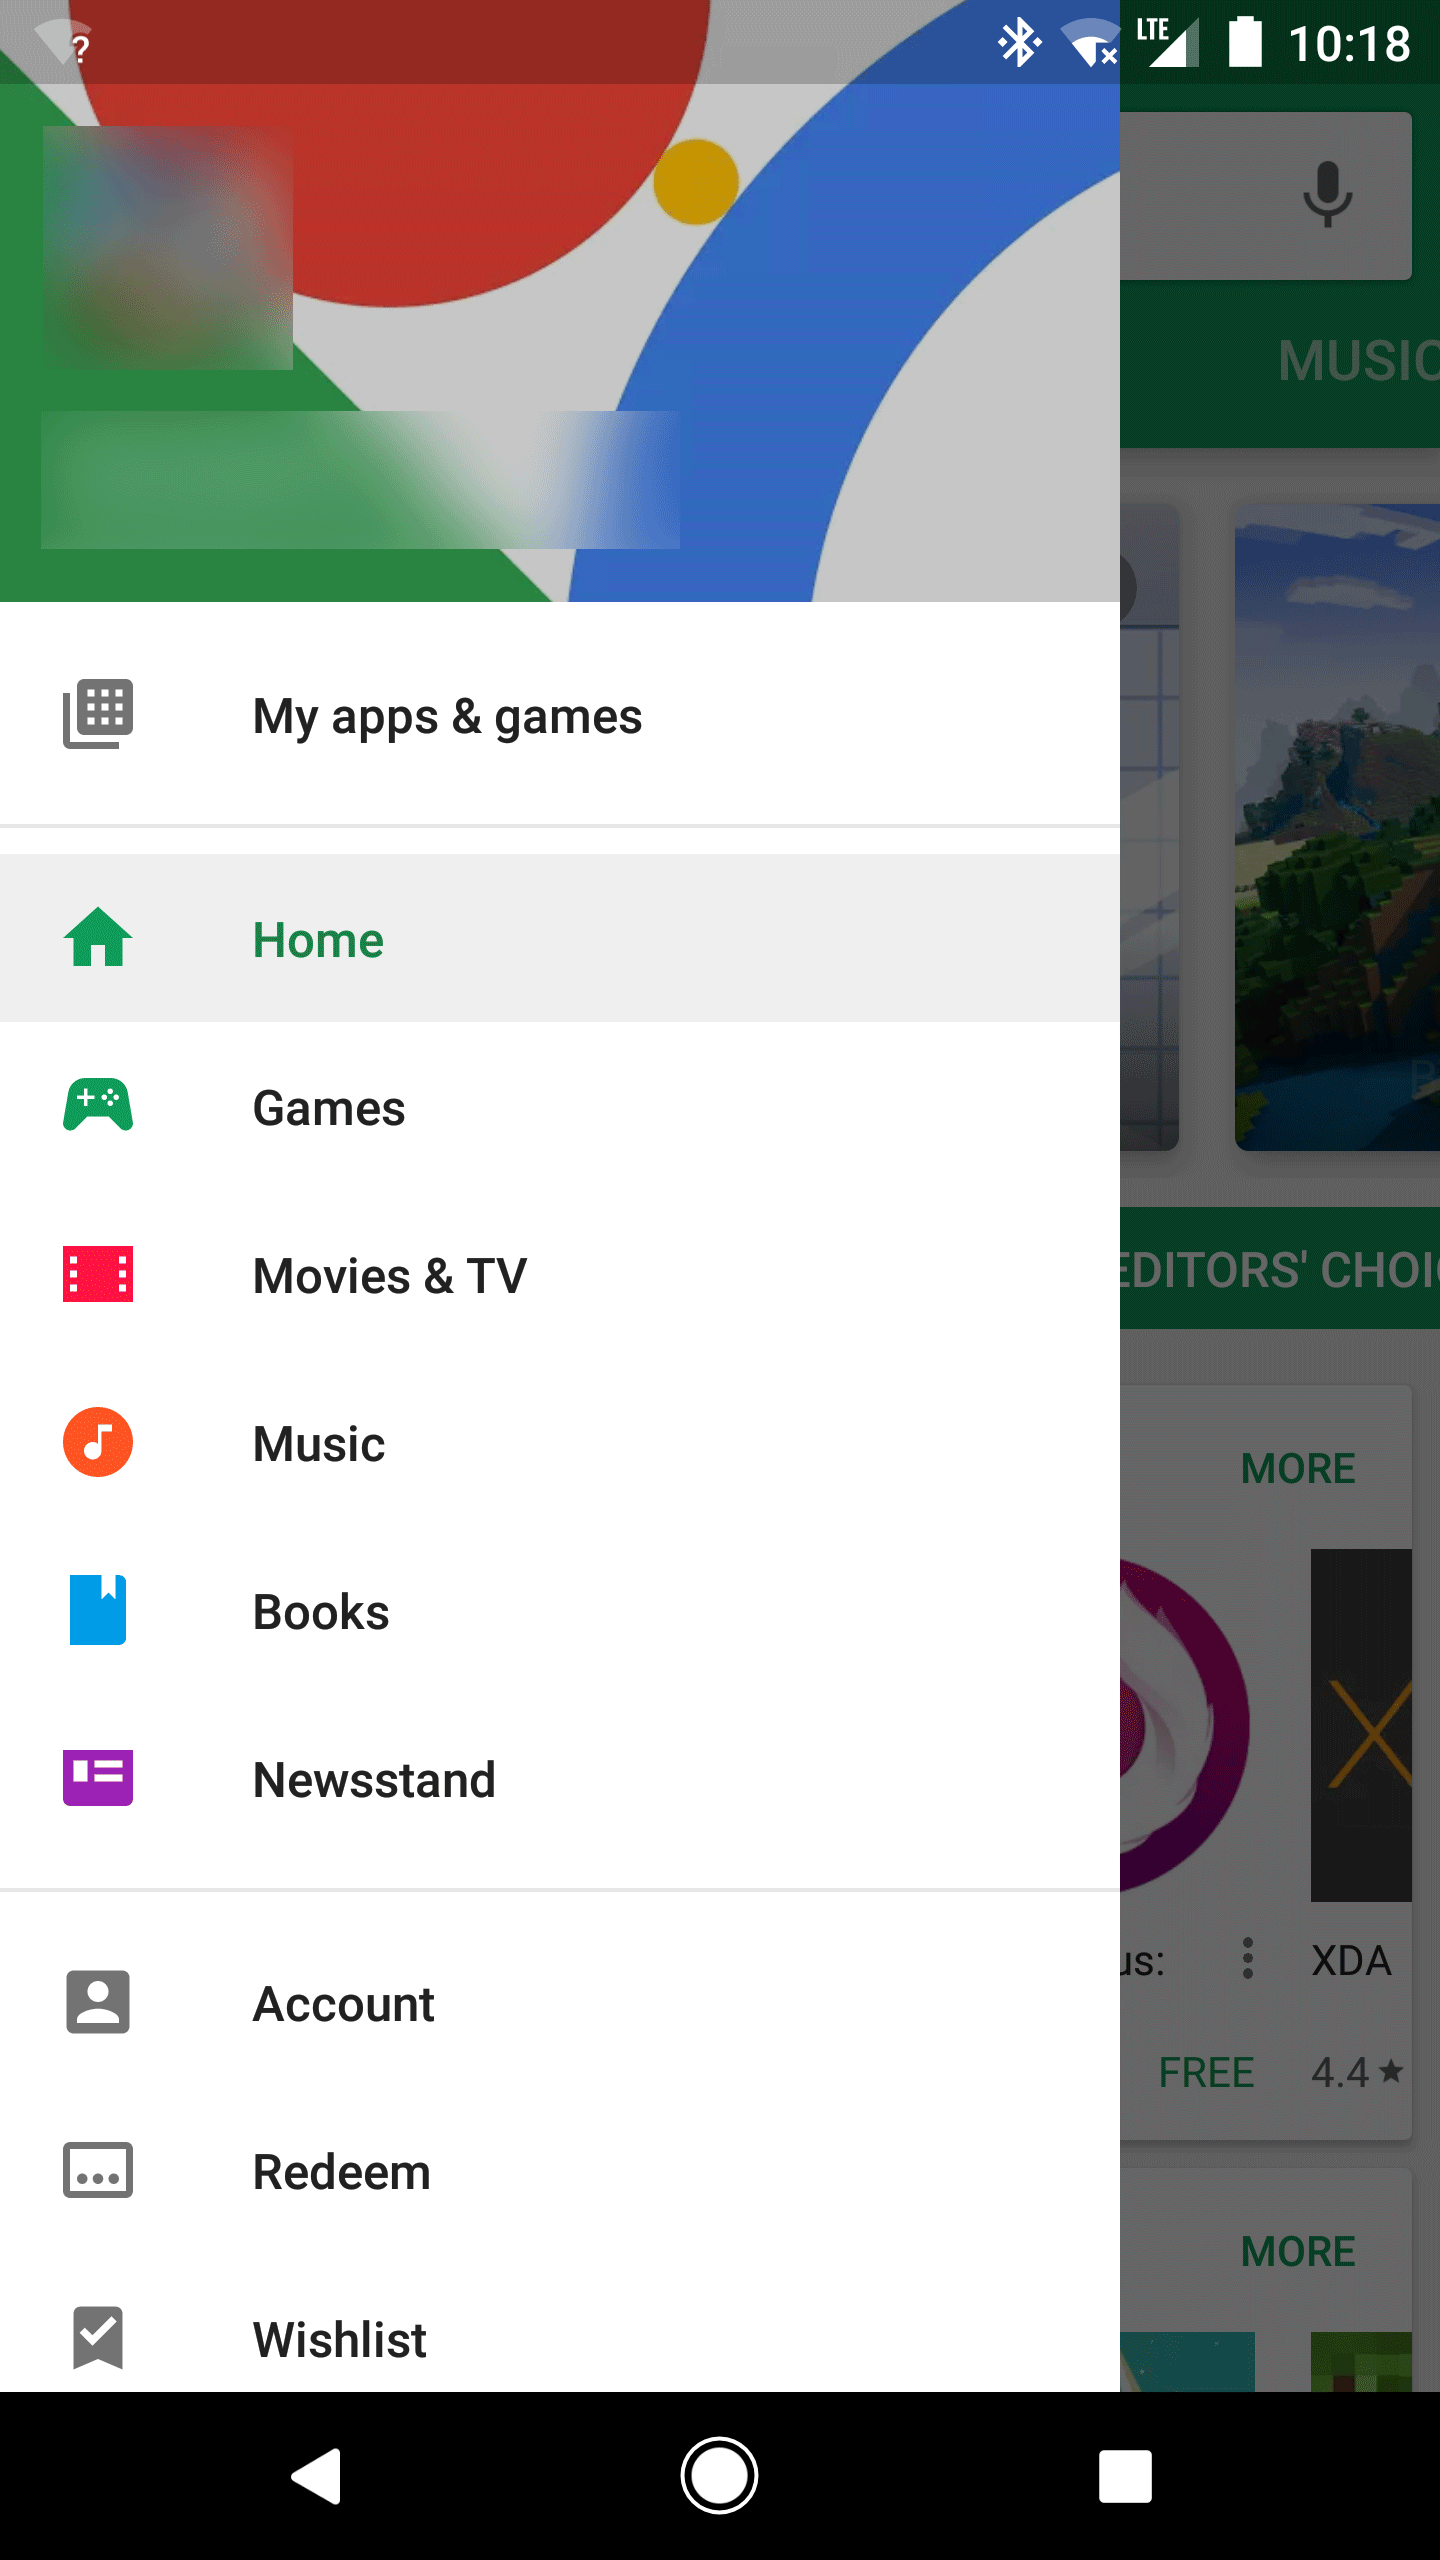 Open Google Play Store app
Tap on Menu